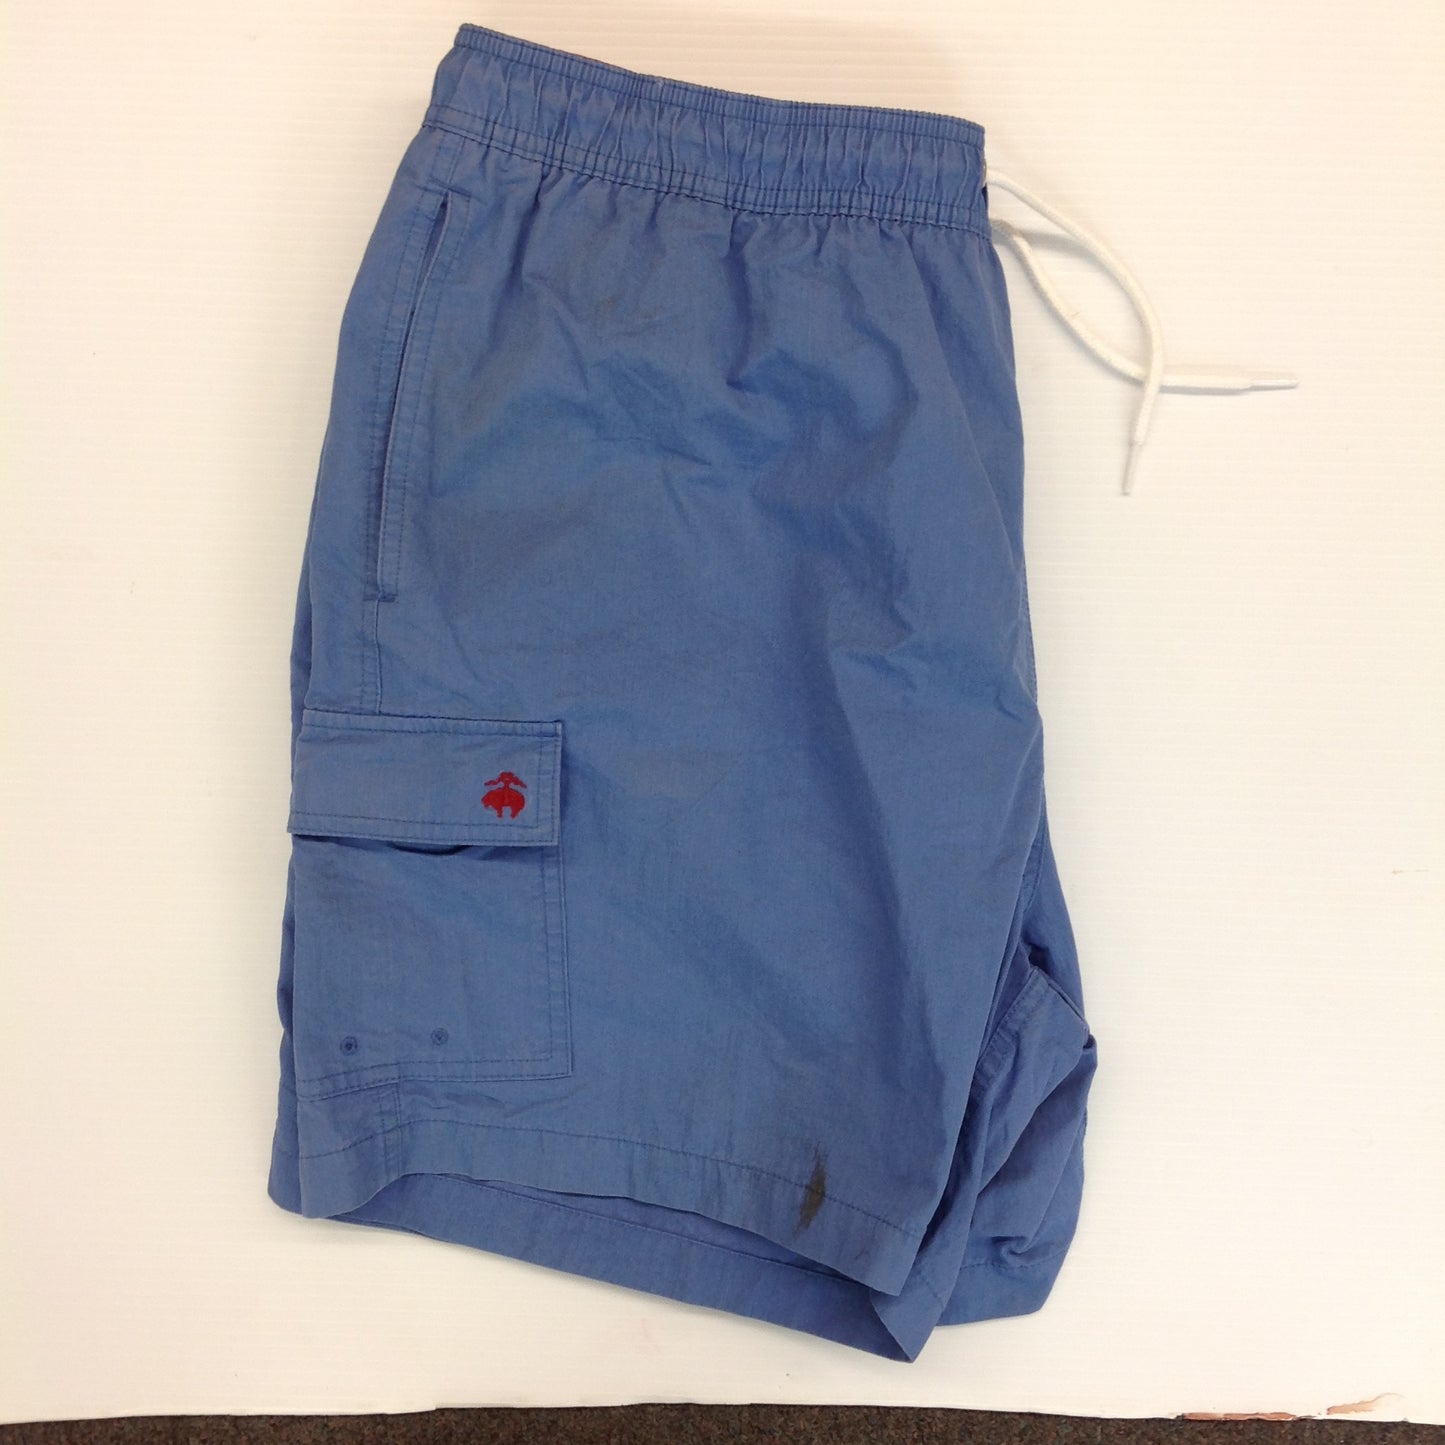 Vintage 346 Brooks Brothers Blue Swim Trunks Shorts Bathing Suit Men's Large